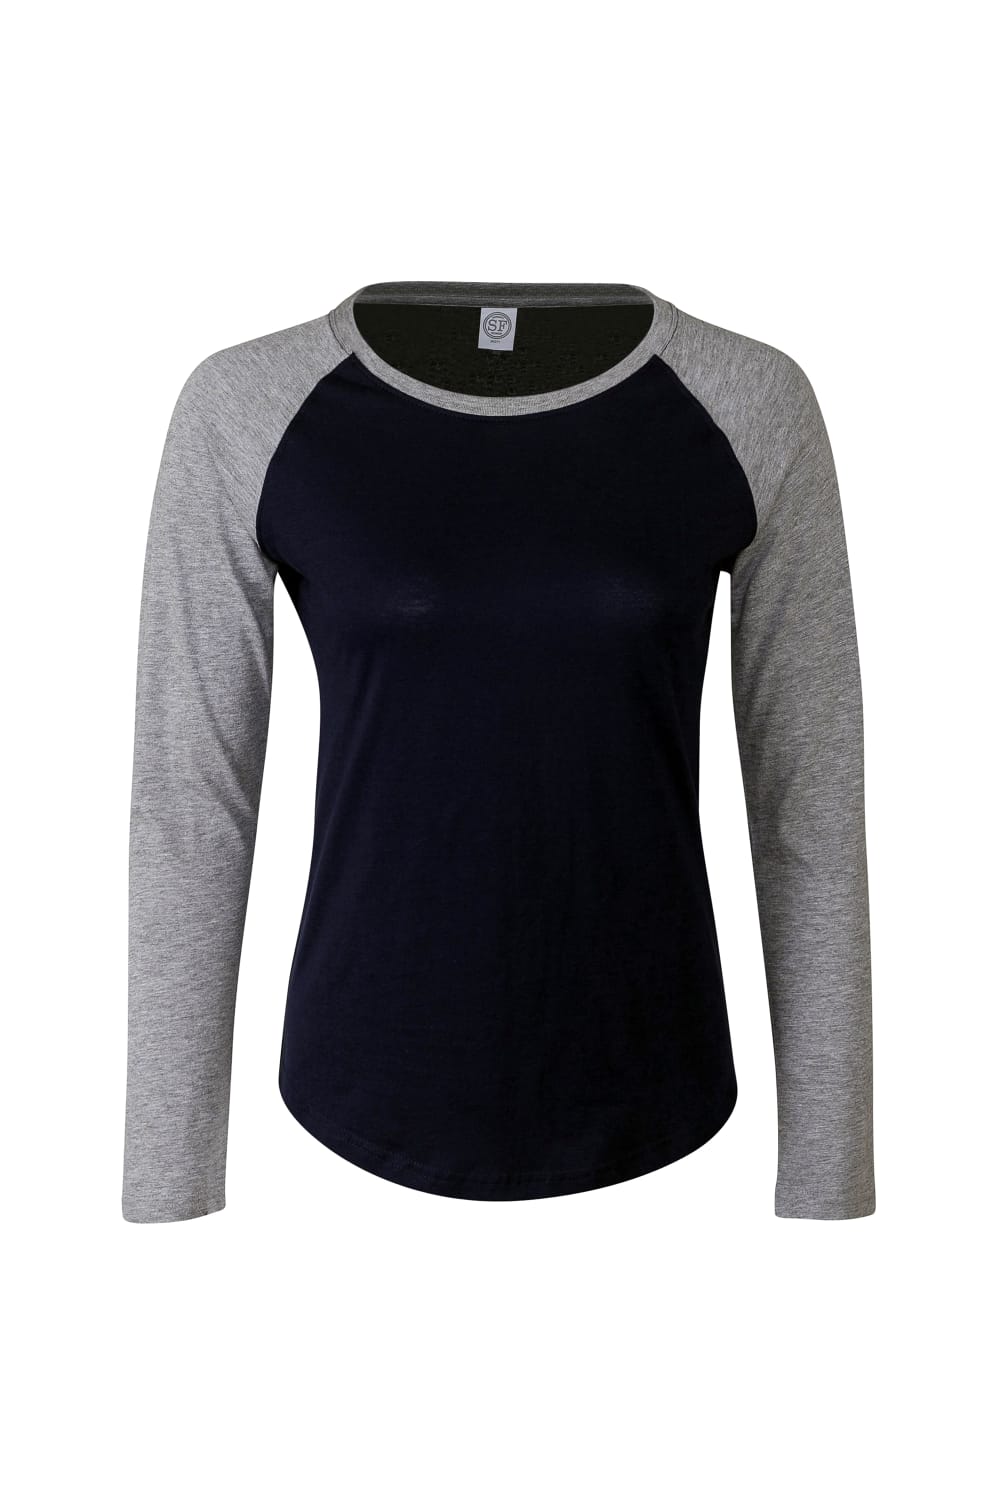 Skinnifit Womens/Ladies Long Sleeve Baseball T-Shirt (Oxford Navy/Heather Gray)